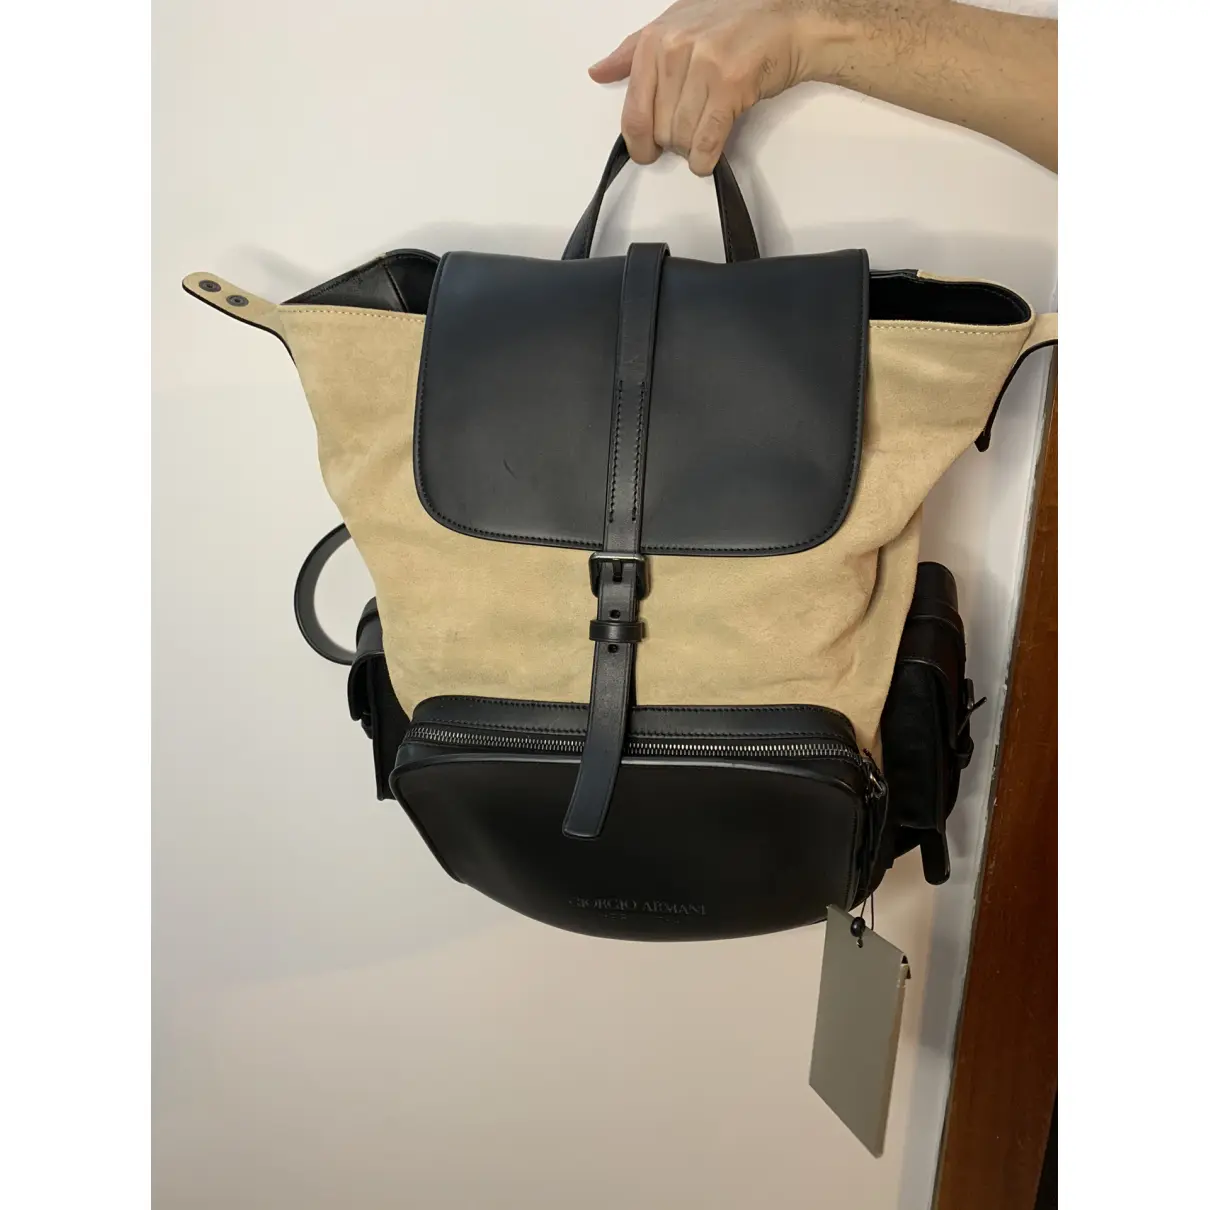 Buy Giorgio Armani Leather weekend bag online